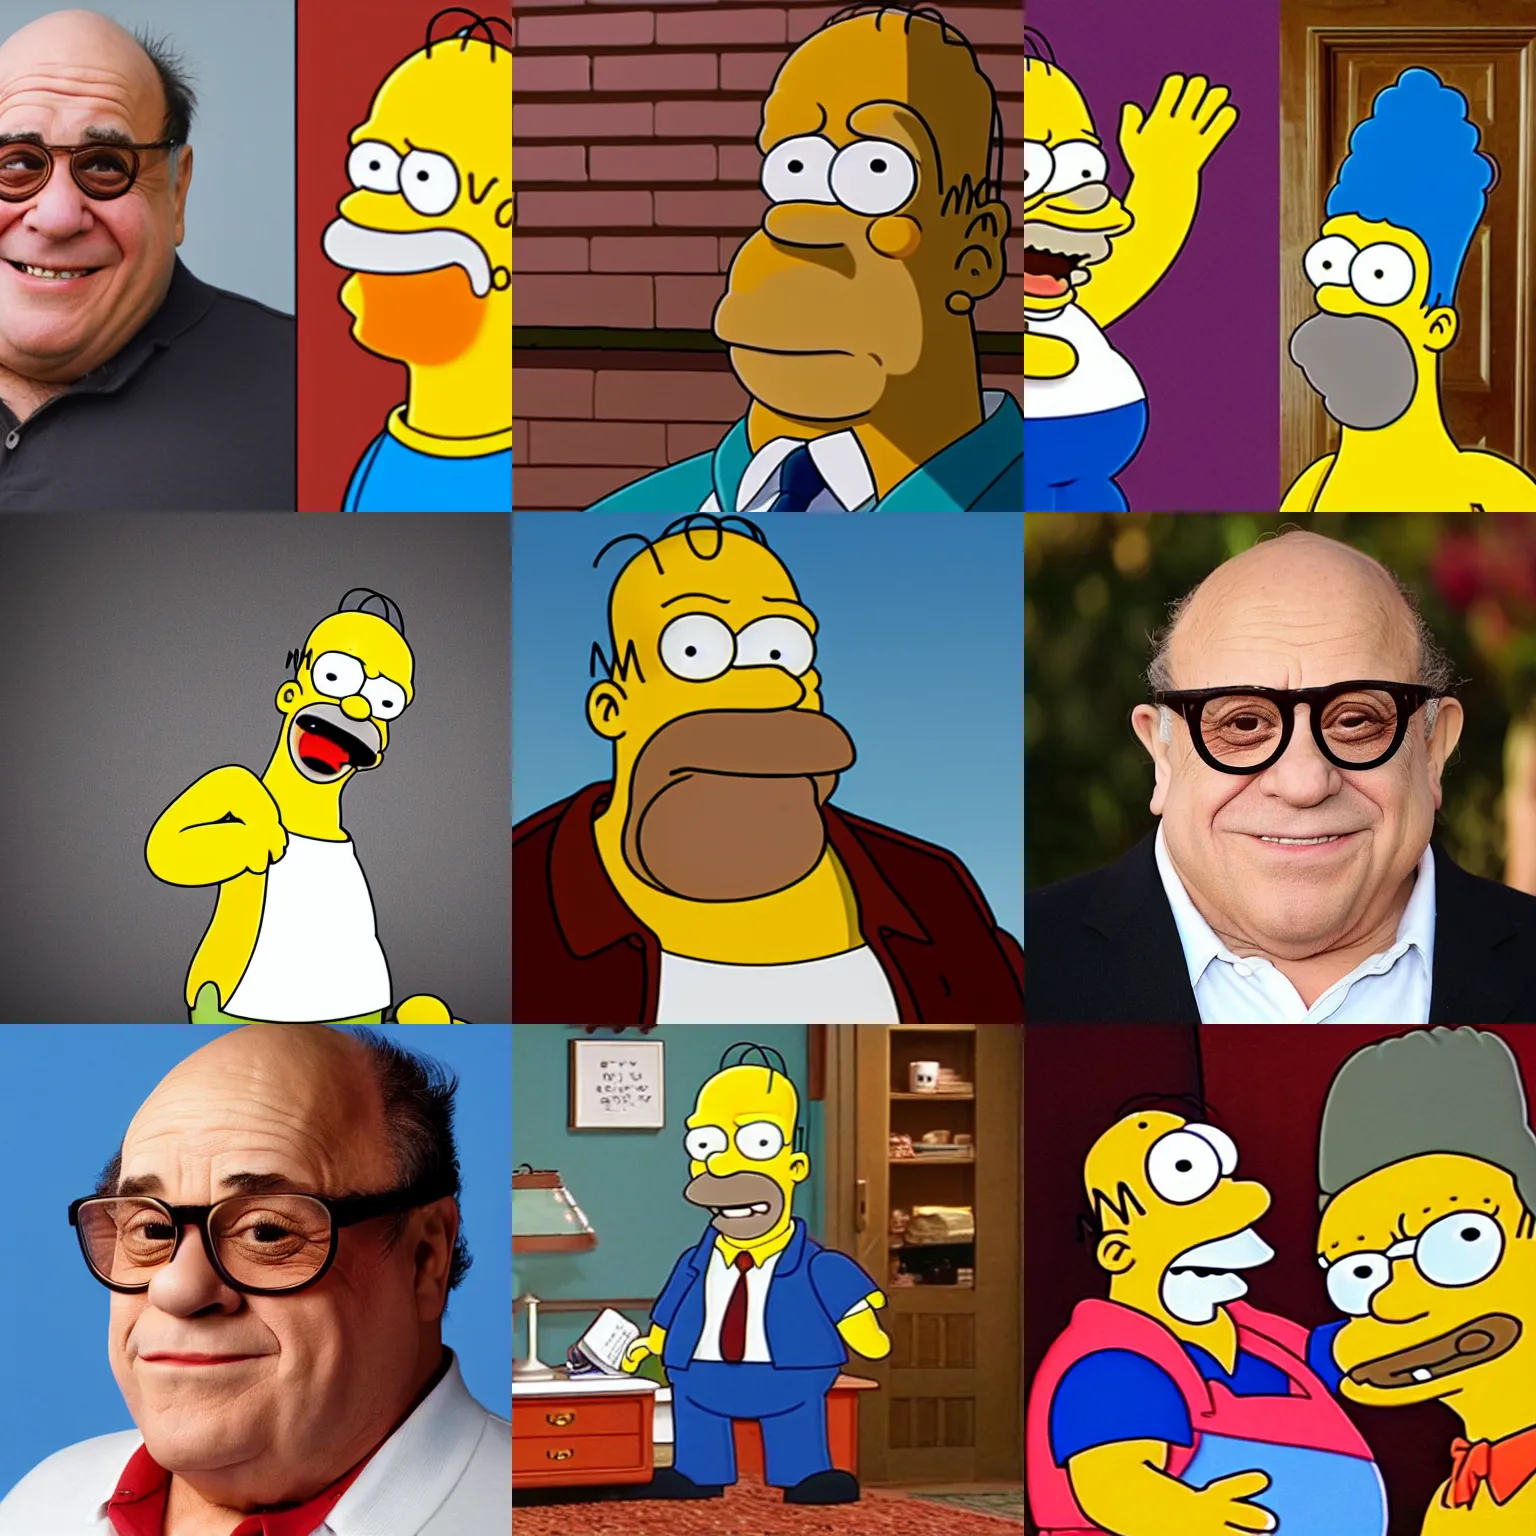 Prompt: <photo name='Homer Simpson' actor='Danny DeVito' age='54' lighting=great hd sitcom>Danny Devito as Homer Simpson</photo>